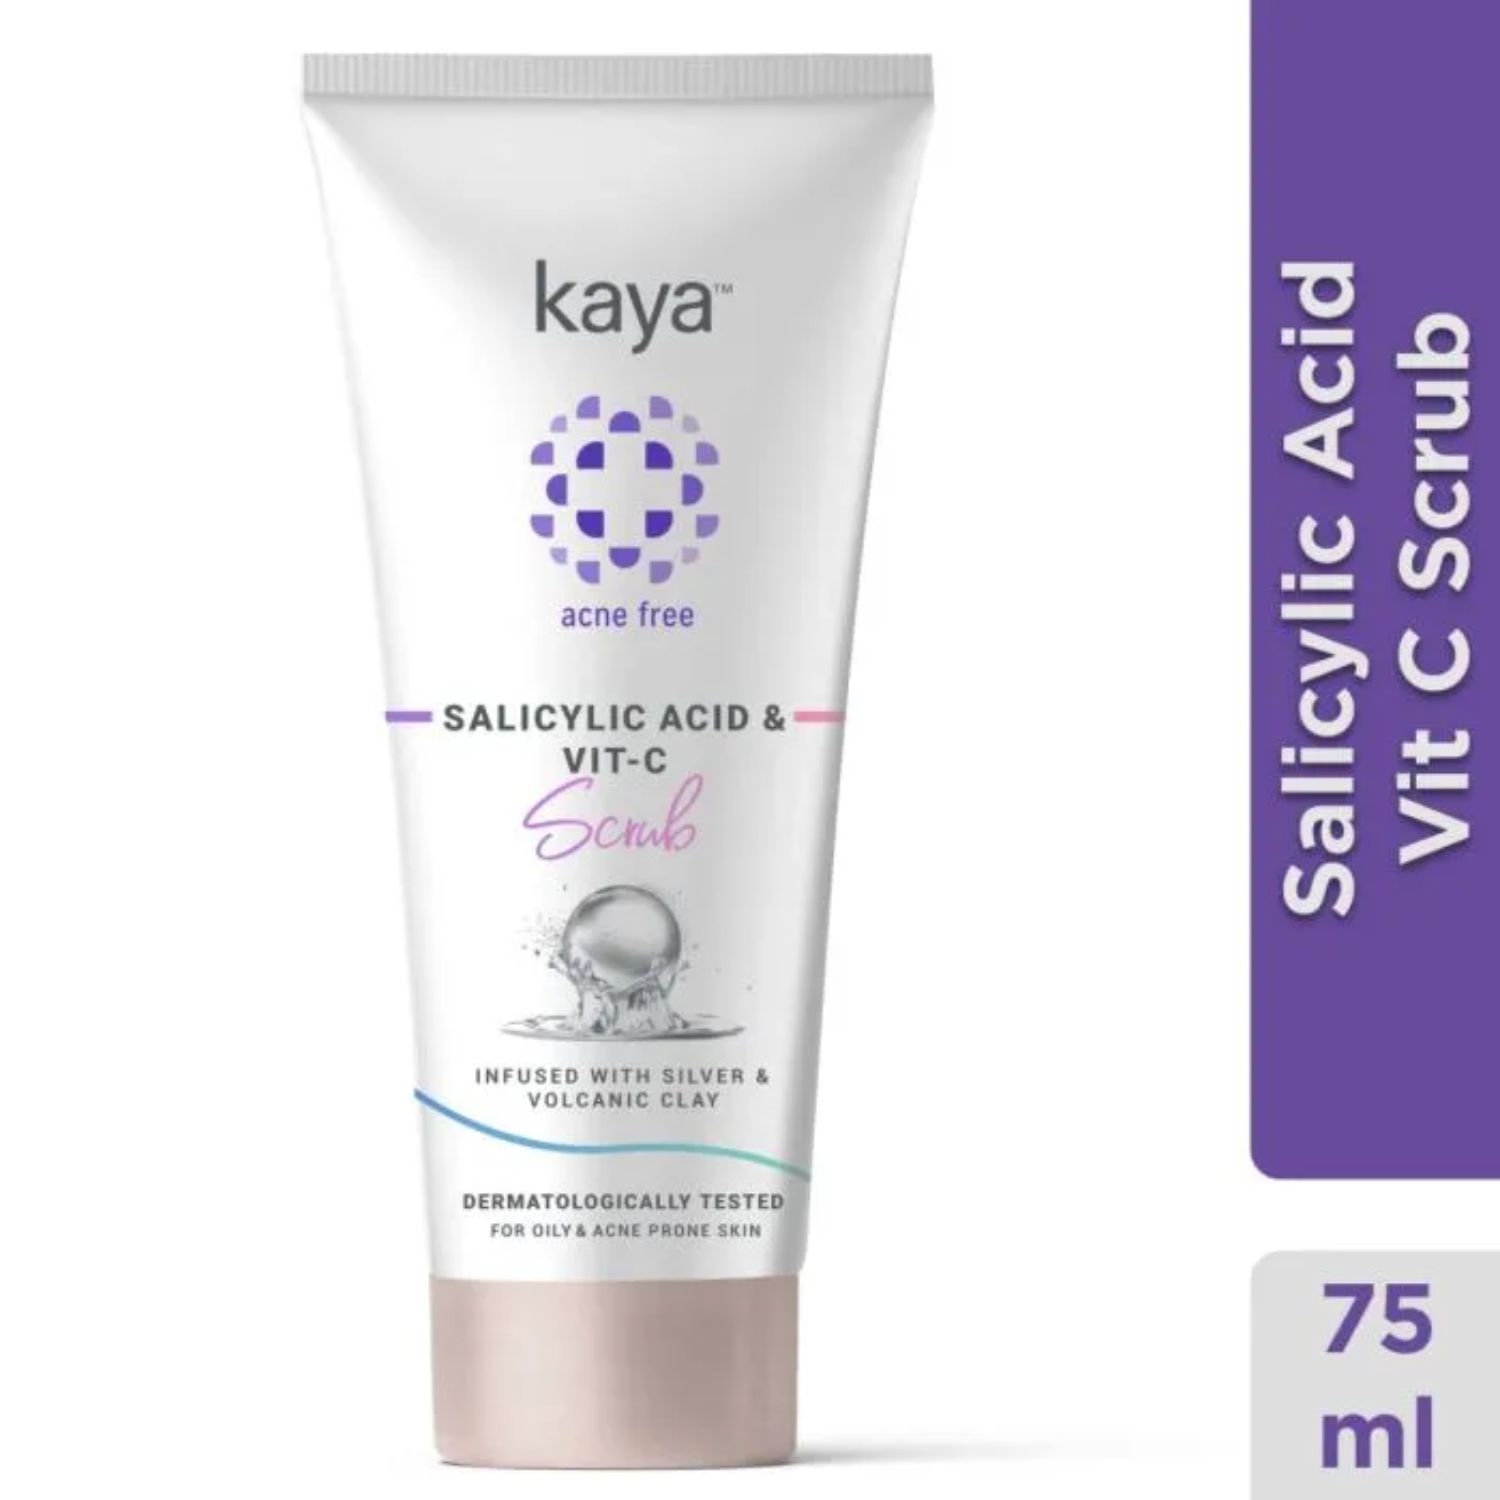 KAYA | KAYA Salicylic Acid Vitamin C Scrub Infused with Silver & Volcanic Clay (75ml)